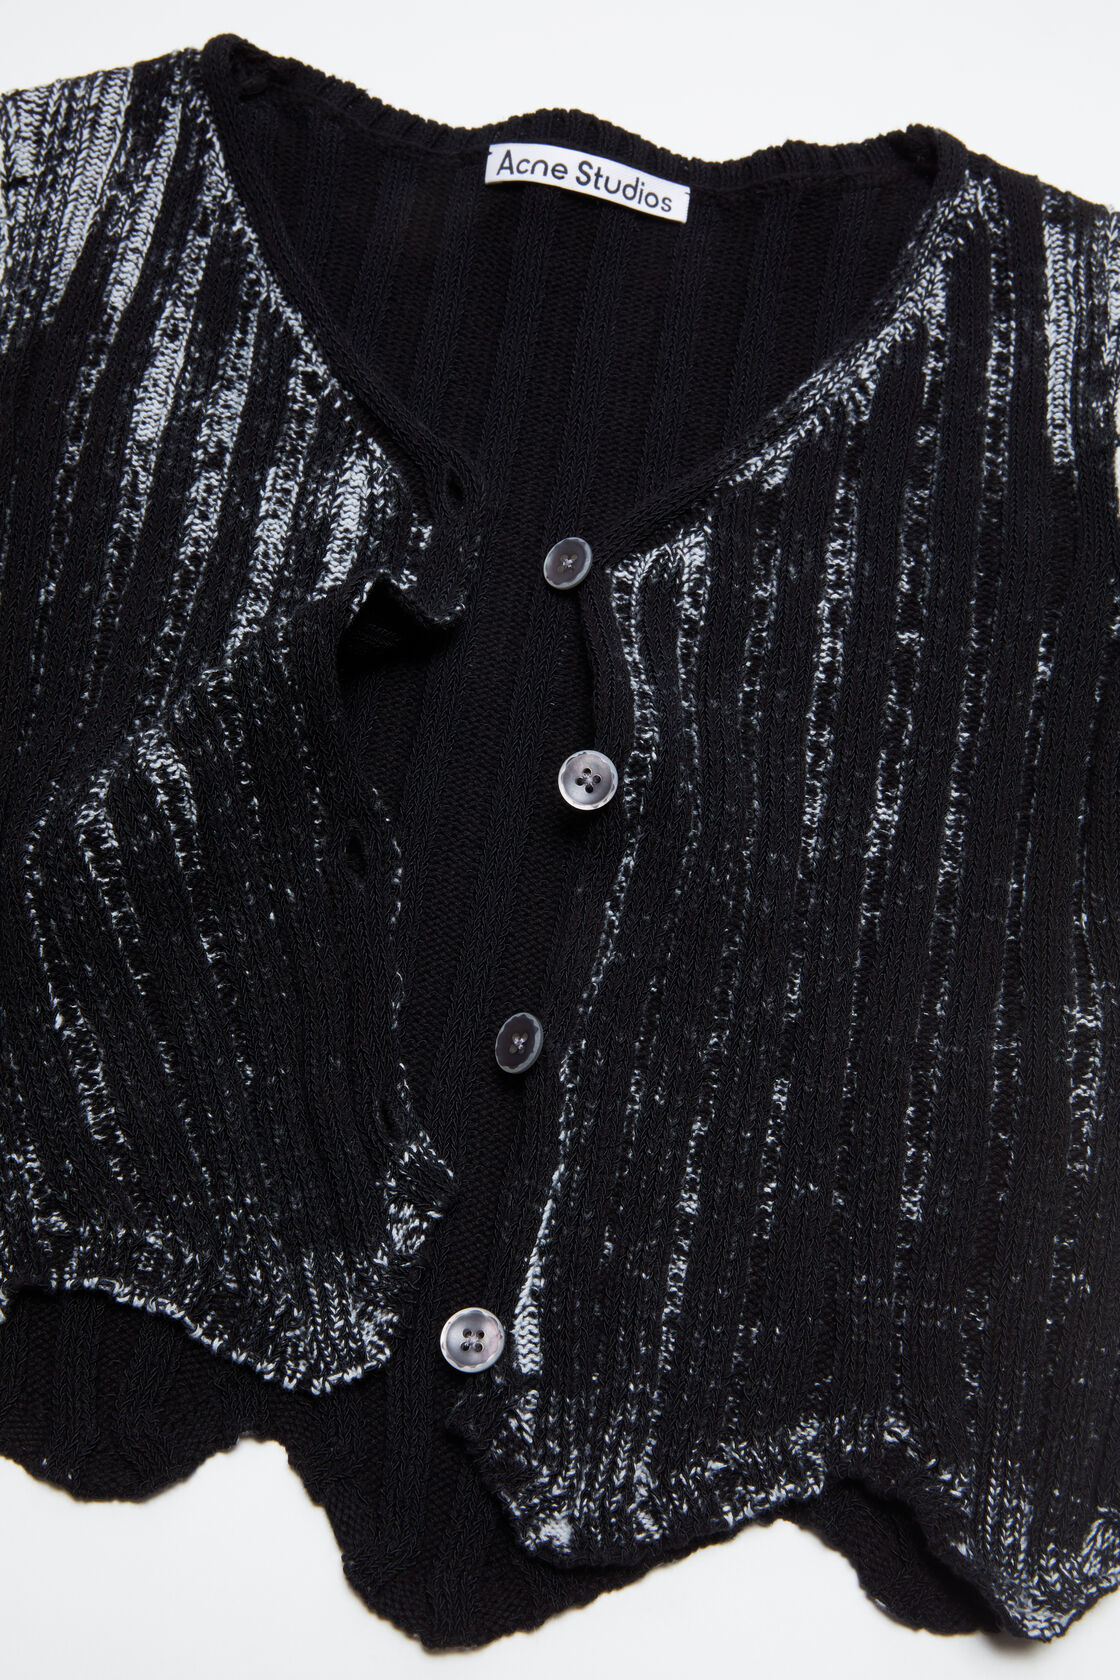 ACNE STUDIOS Knit Cardigan in Black/White M